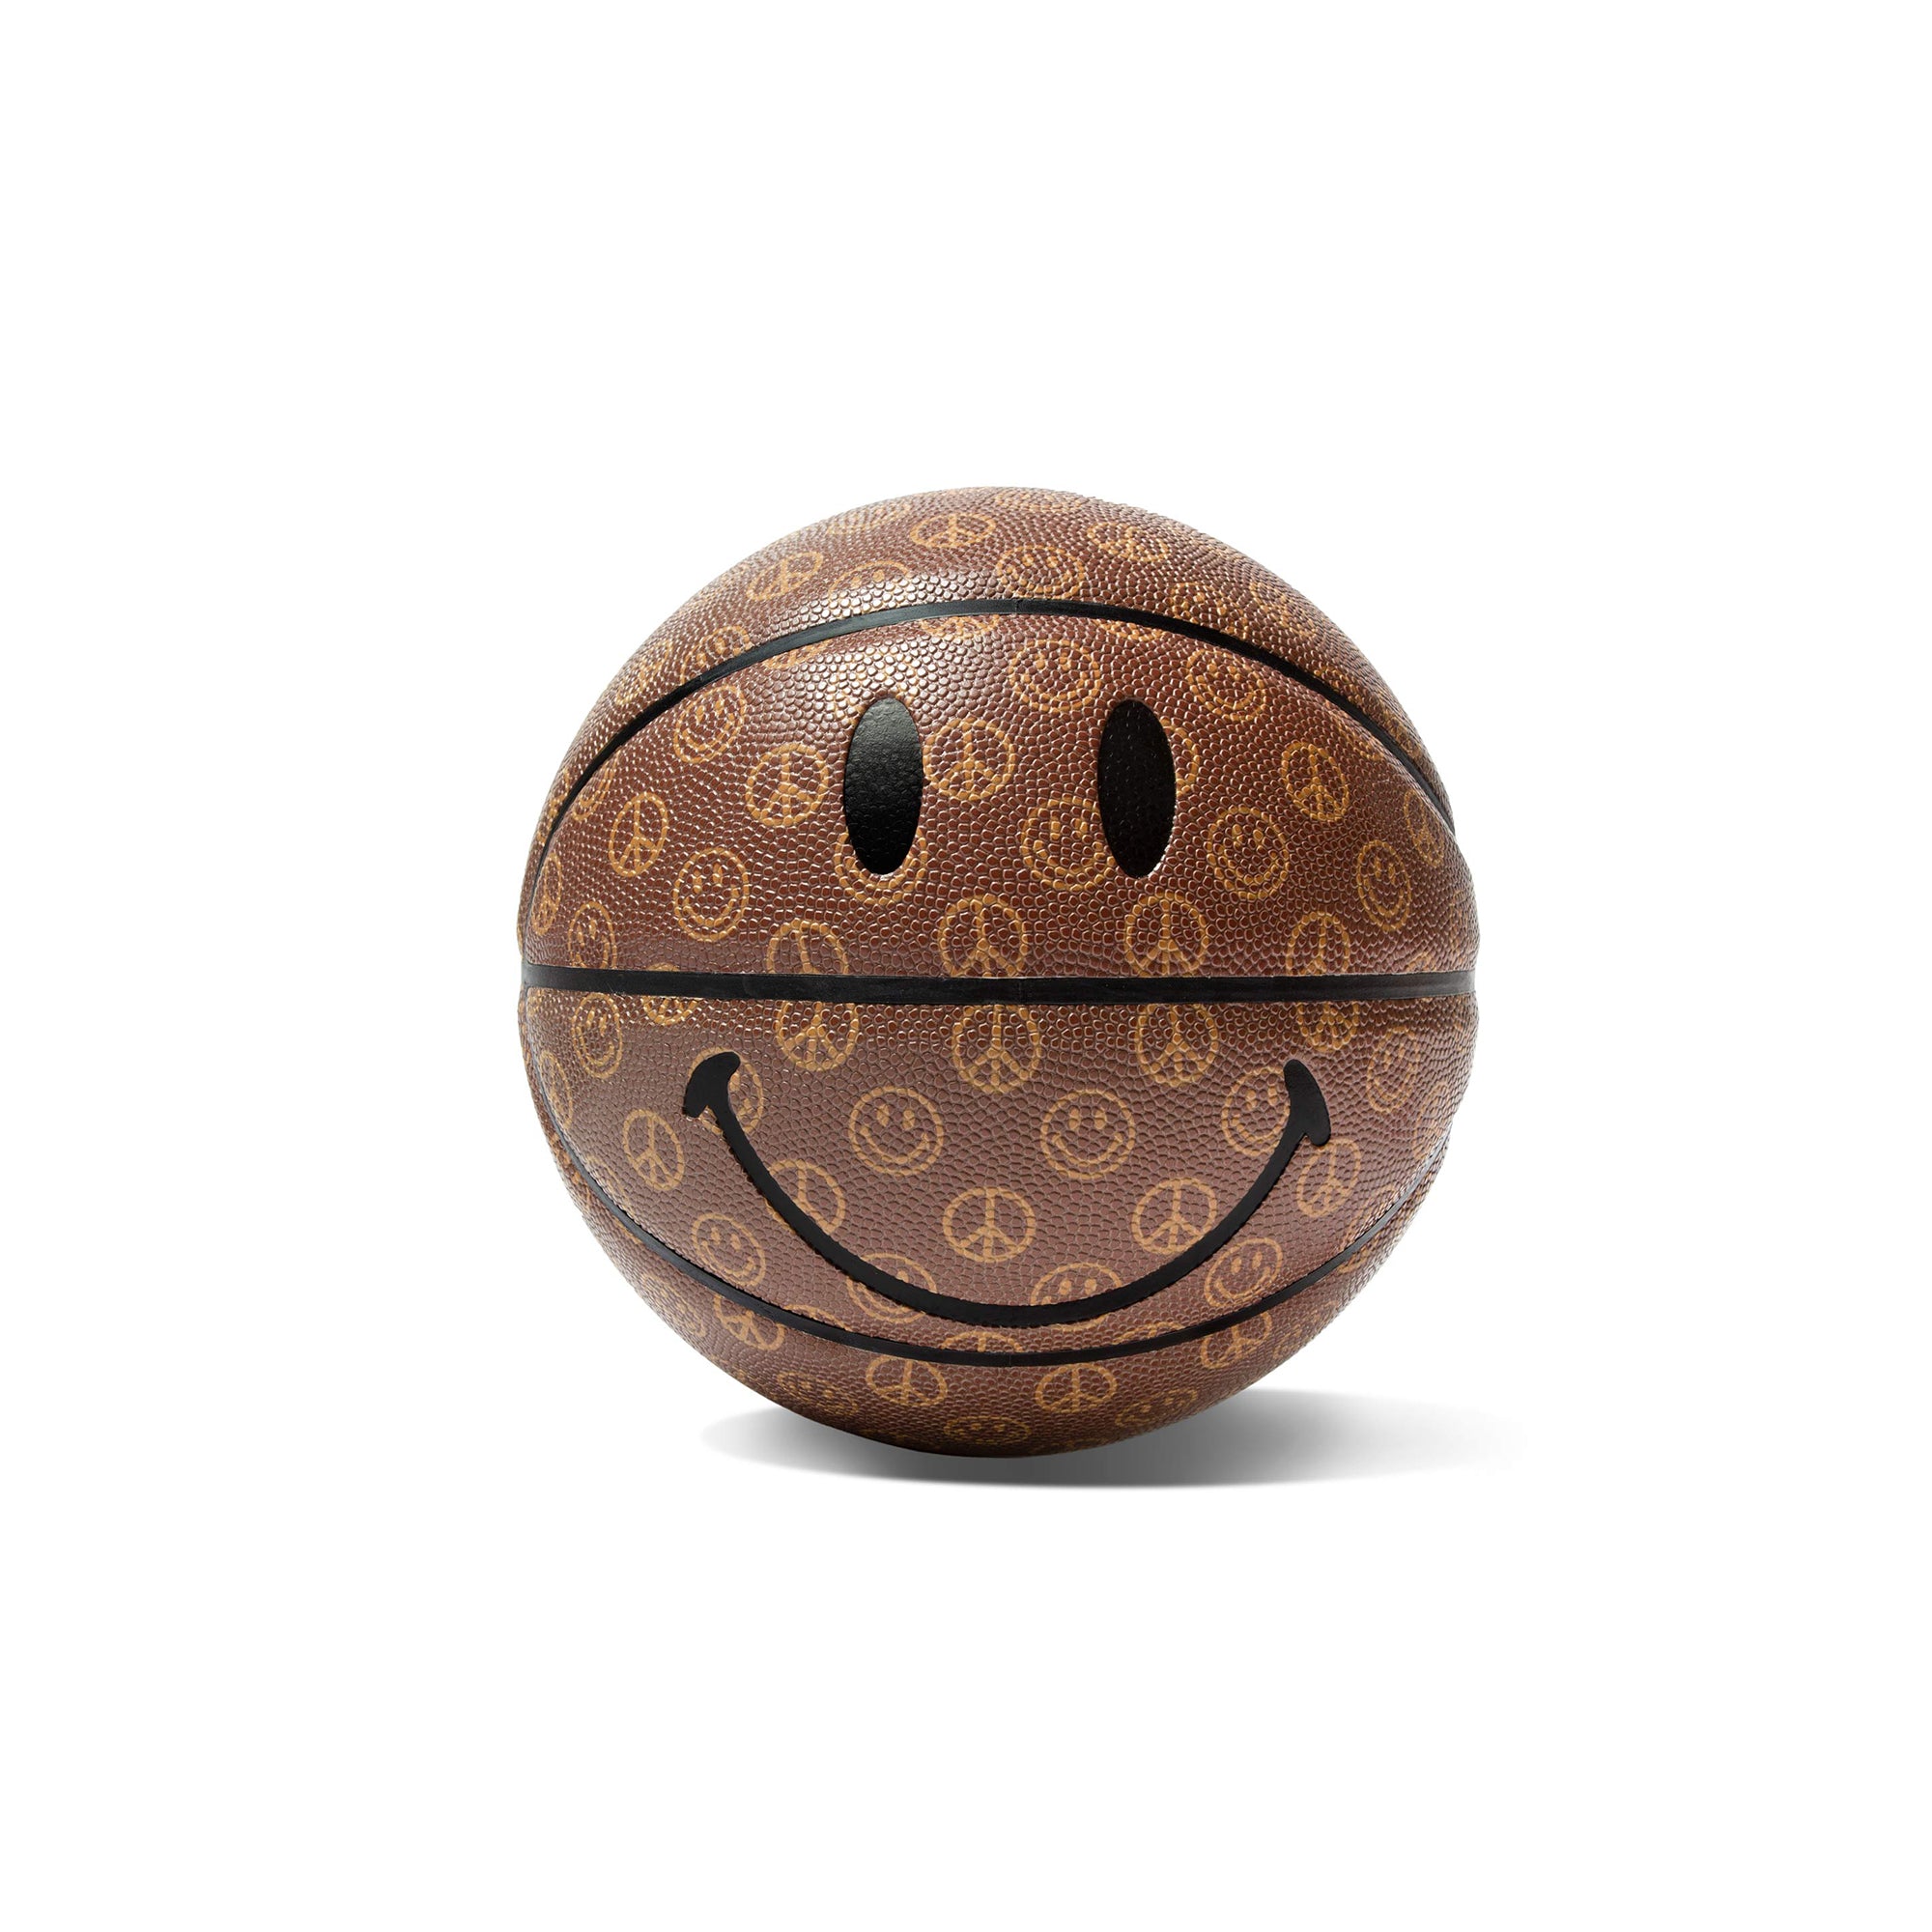 Chinatown Smiley Cabana Basketball Jersey - Brown